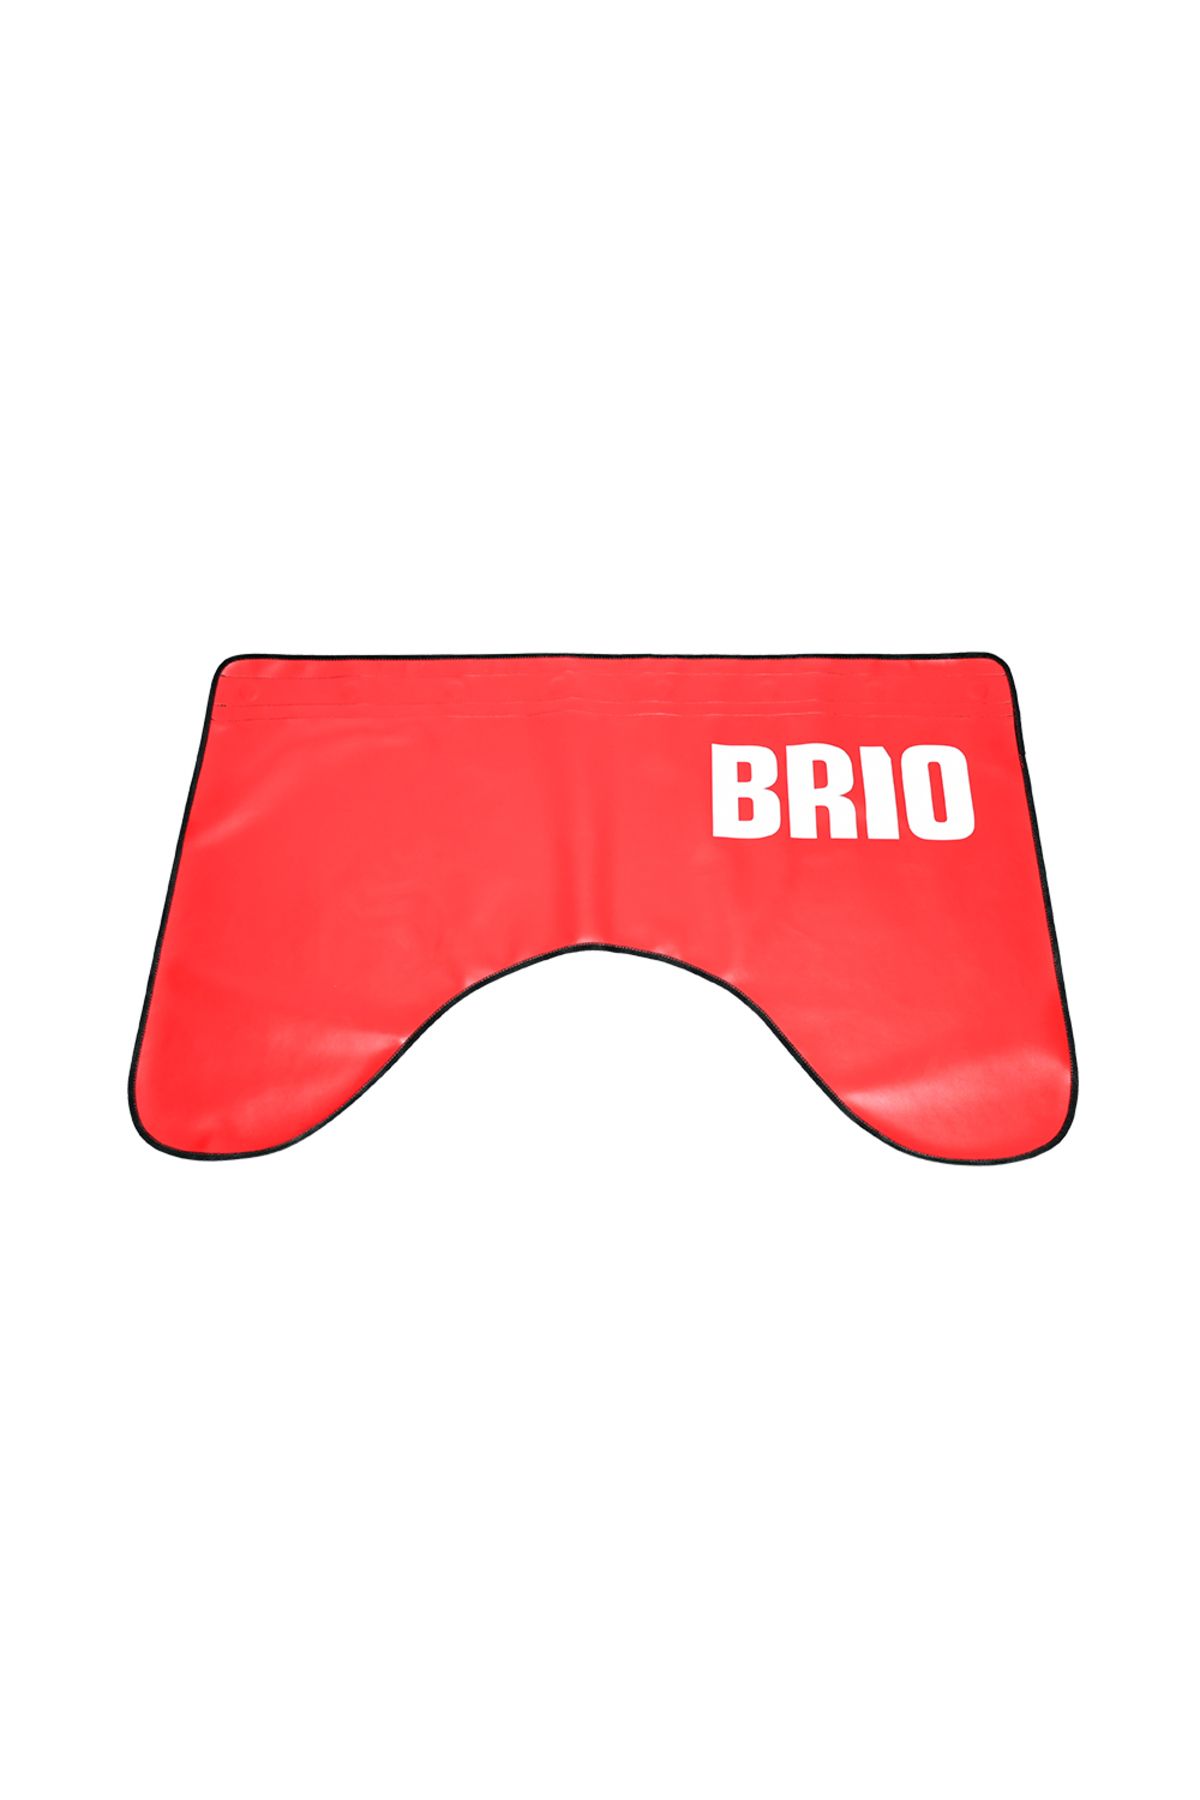 Brio Çamurluk Örtüsü Mıknatıslı 100x65 Cm Kırmızı